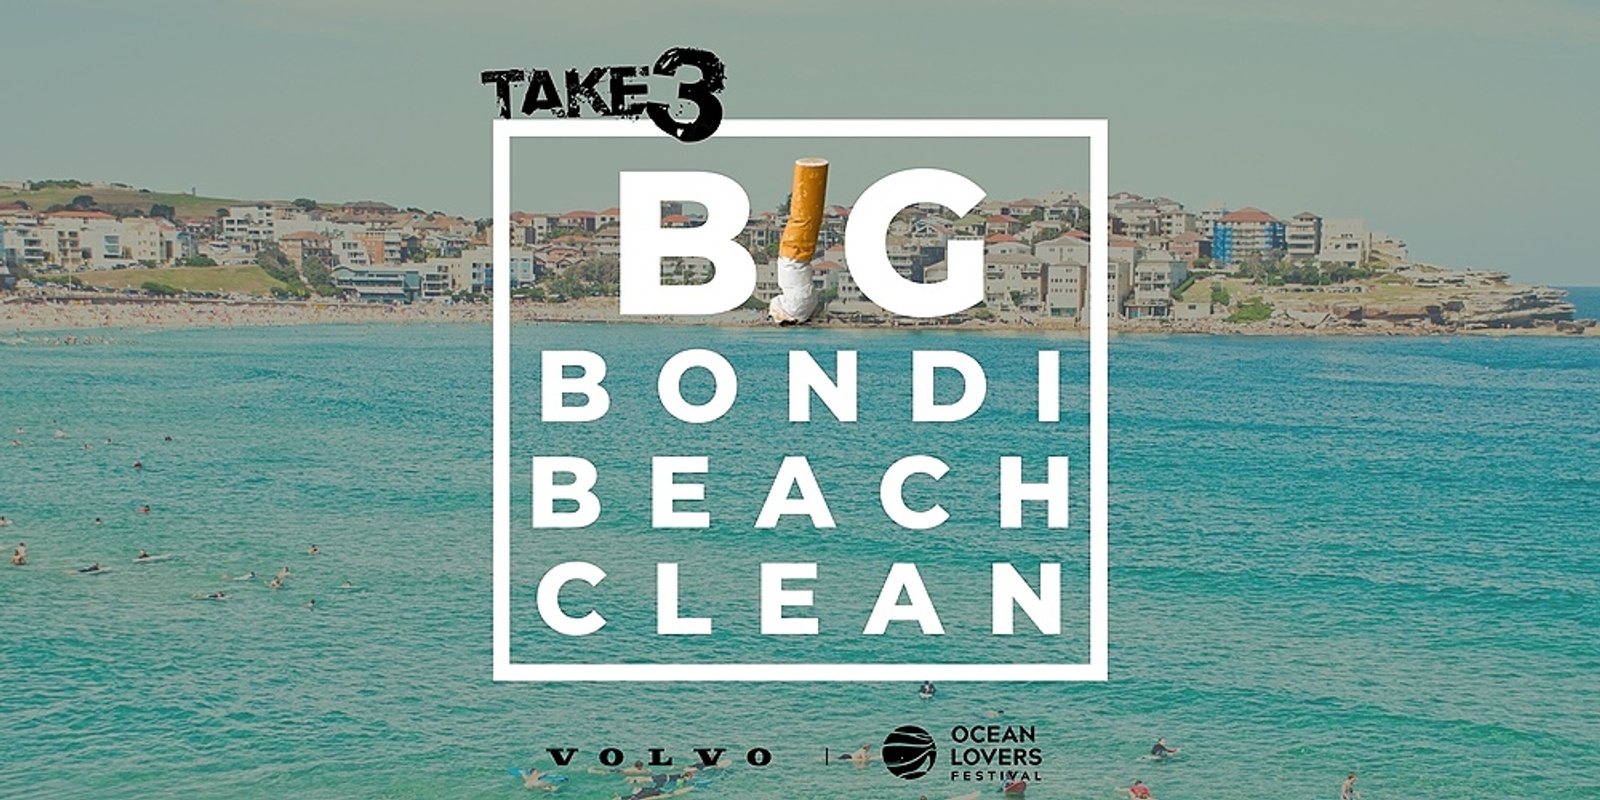 Banner image for Volvo Ocean Lovers Festival Big Bondi Beach Clean